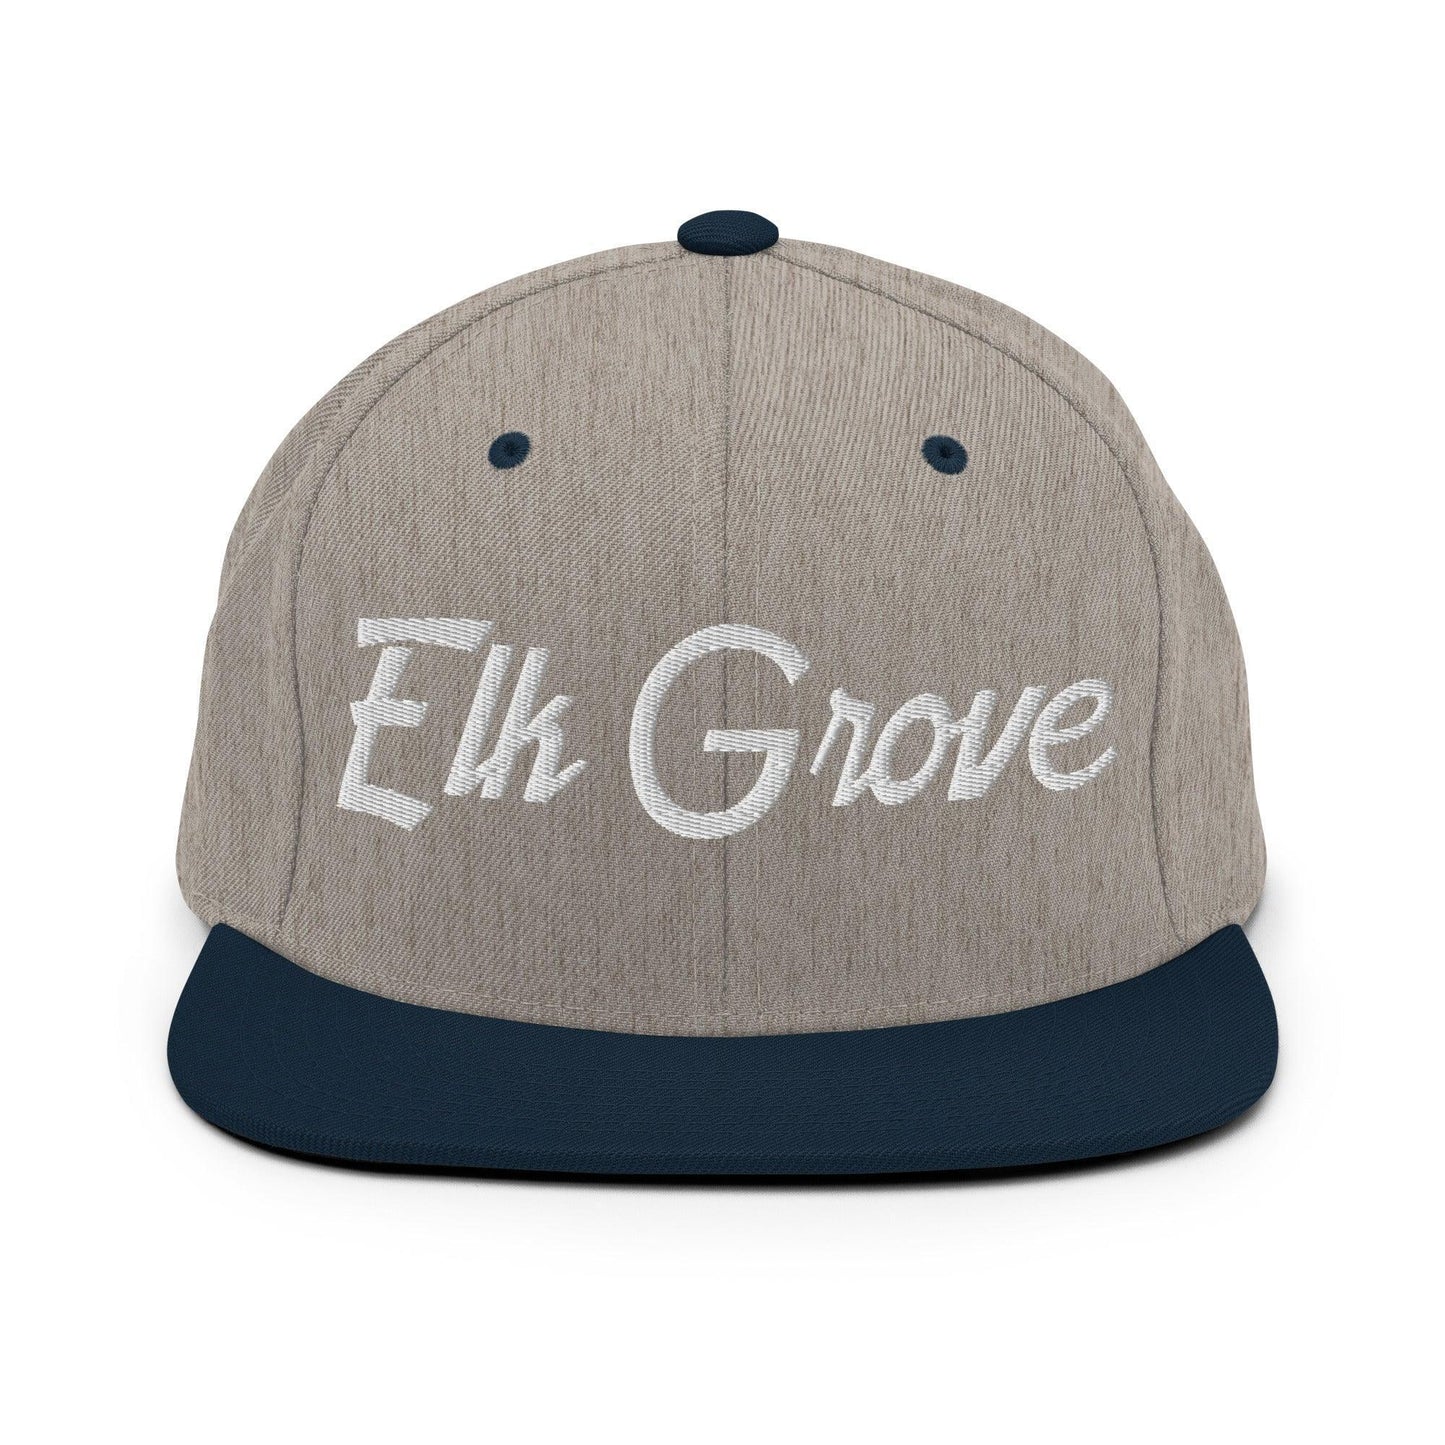 Elk Grove Script Snapback Hat Heather Grey/ Navy